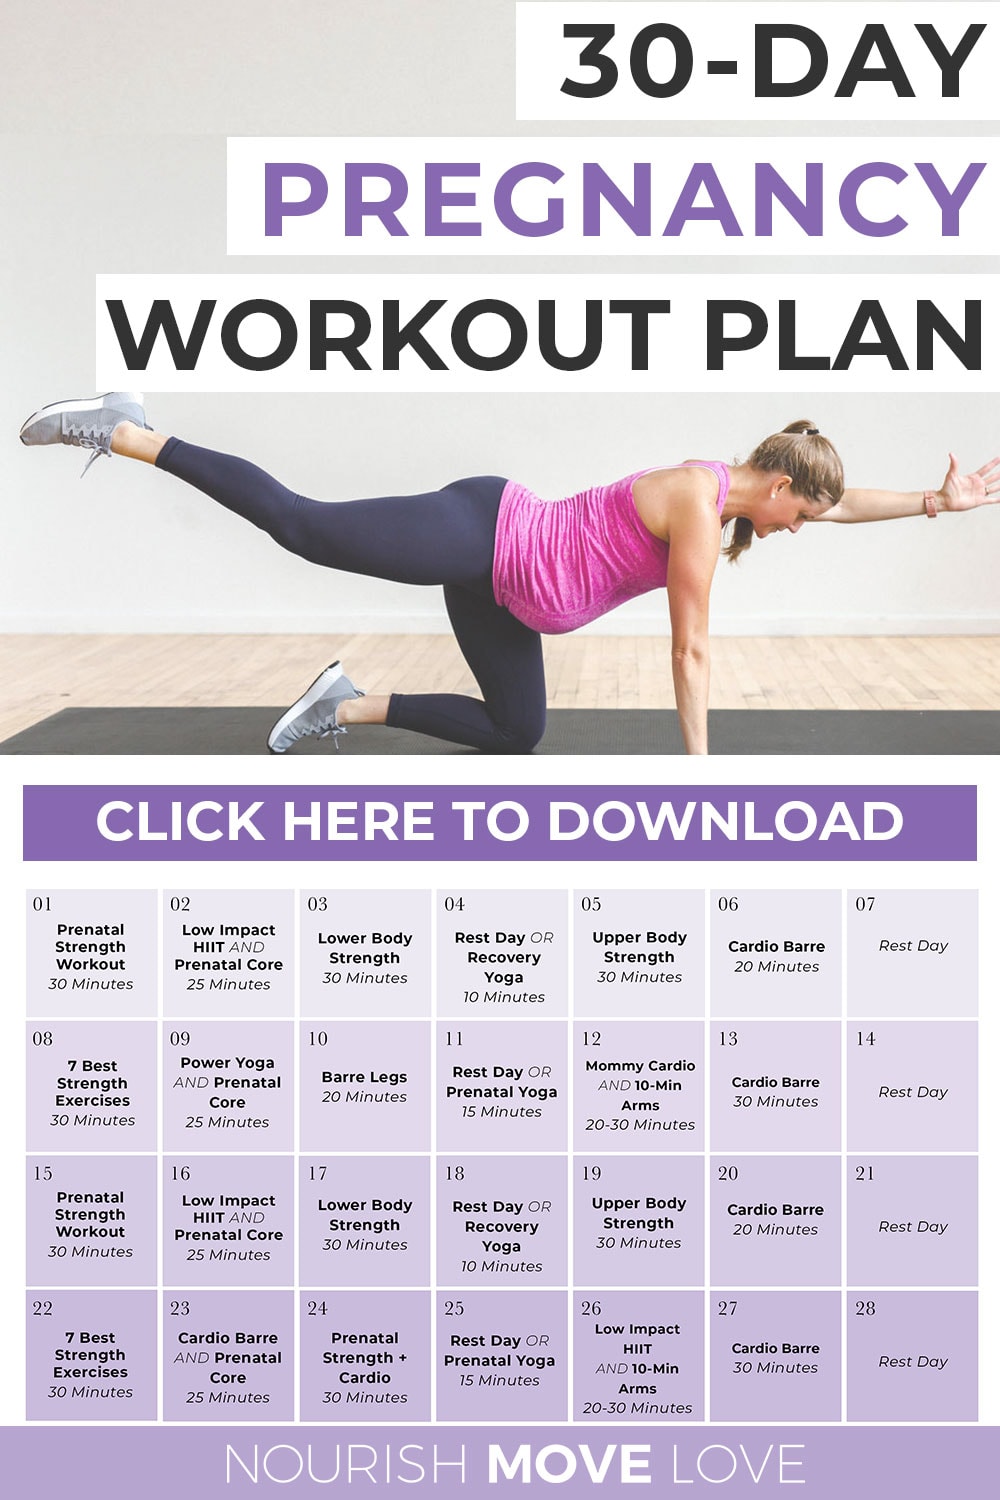 free-pregnancy-workout-plan-by-trimester-nourish-move-love